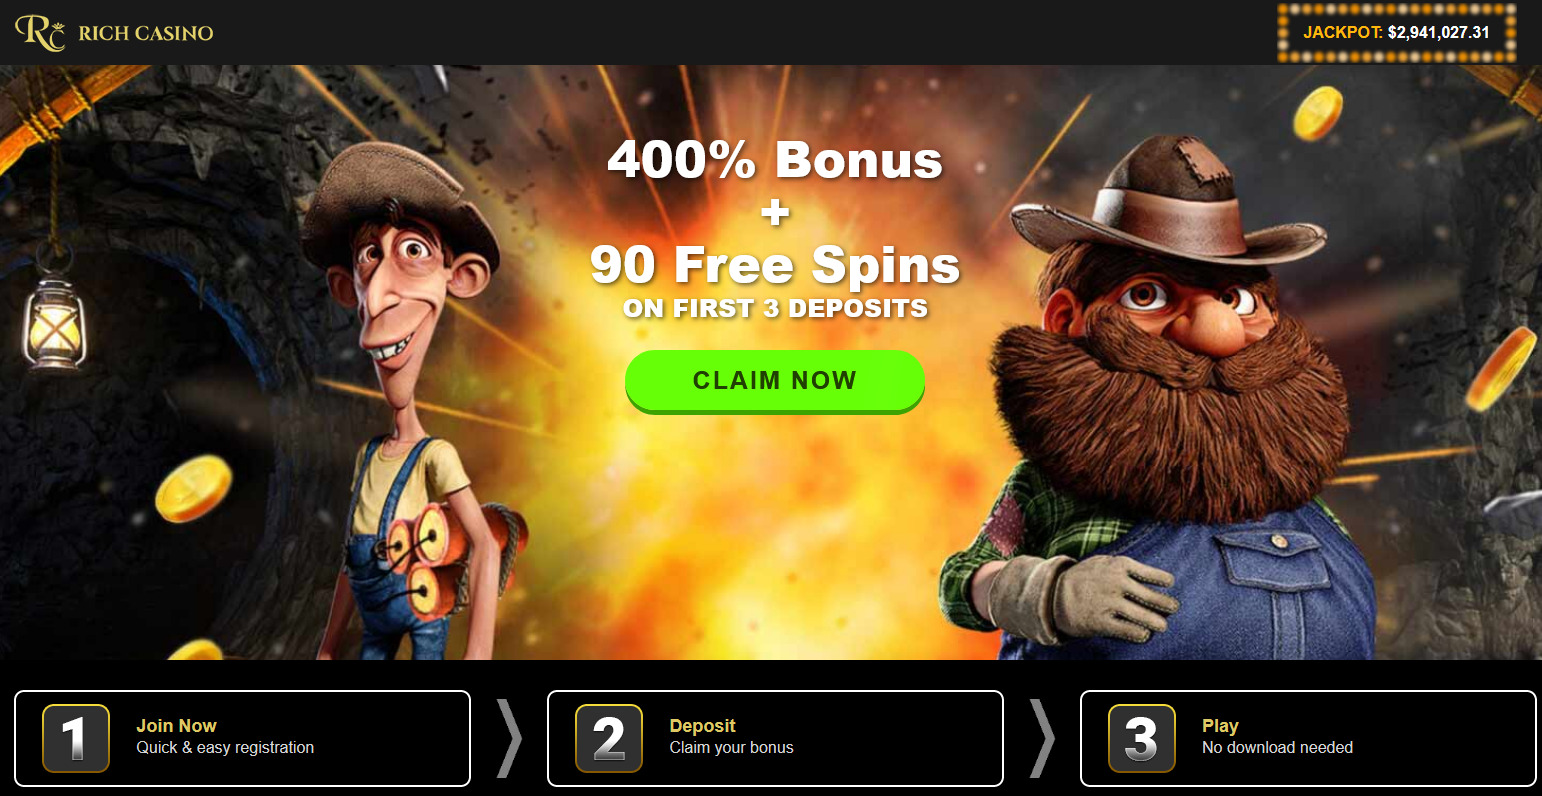 Rich Casino - 675% + 60 free spins. Game: 3 Genies